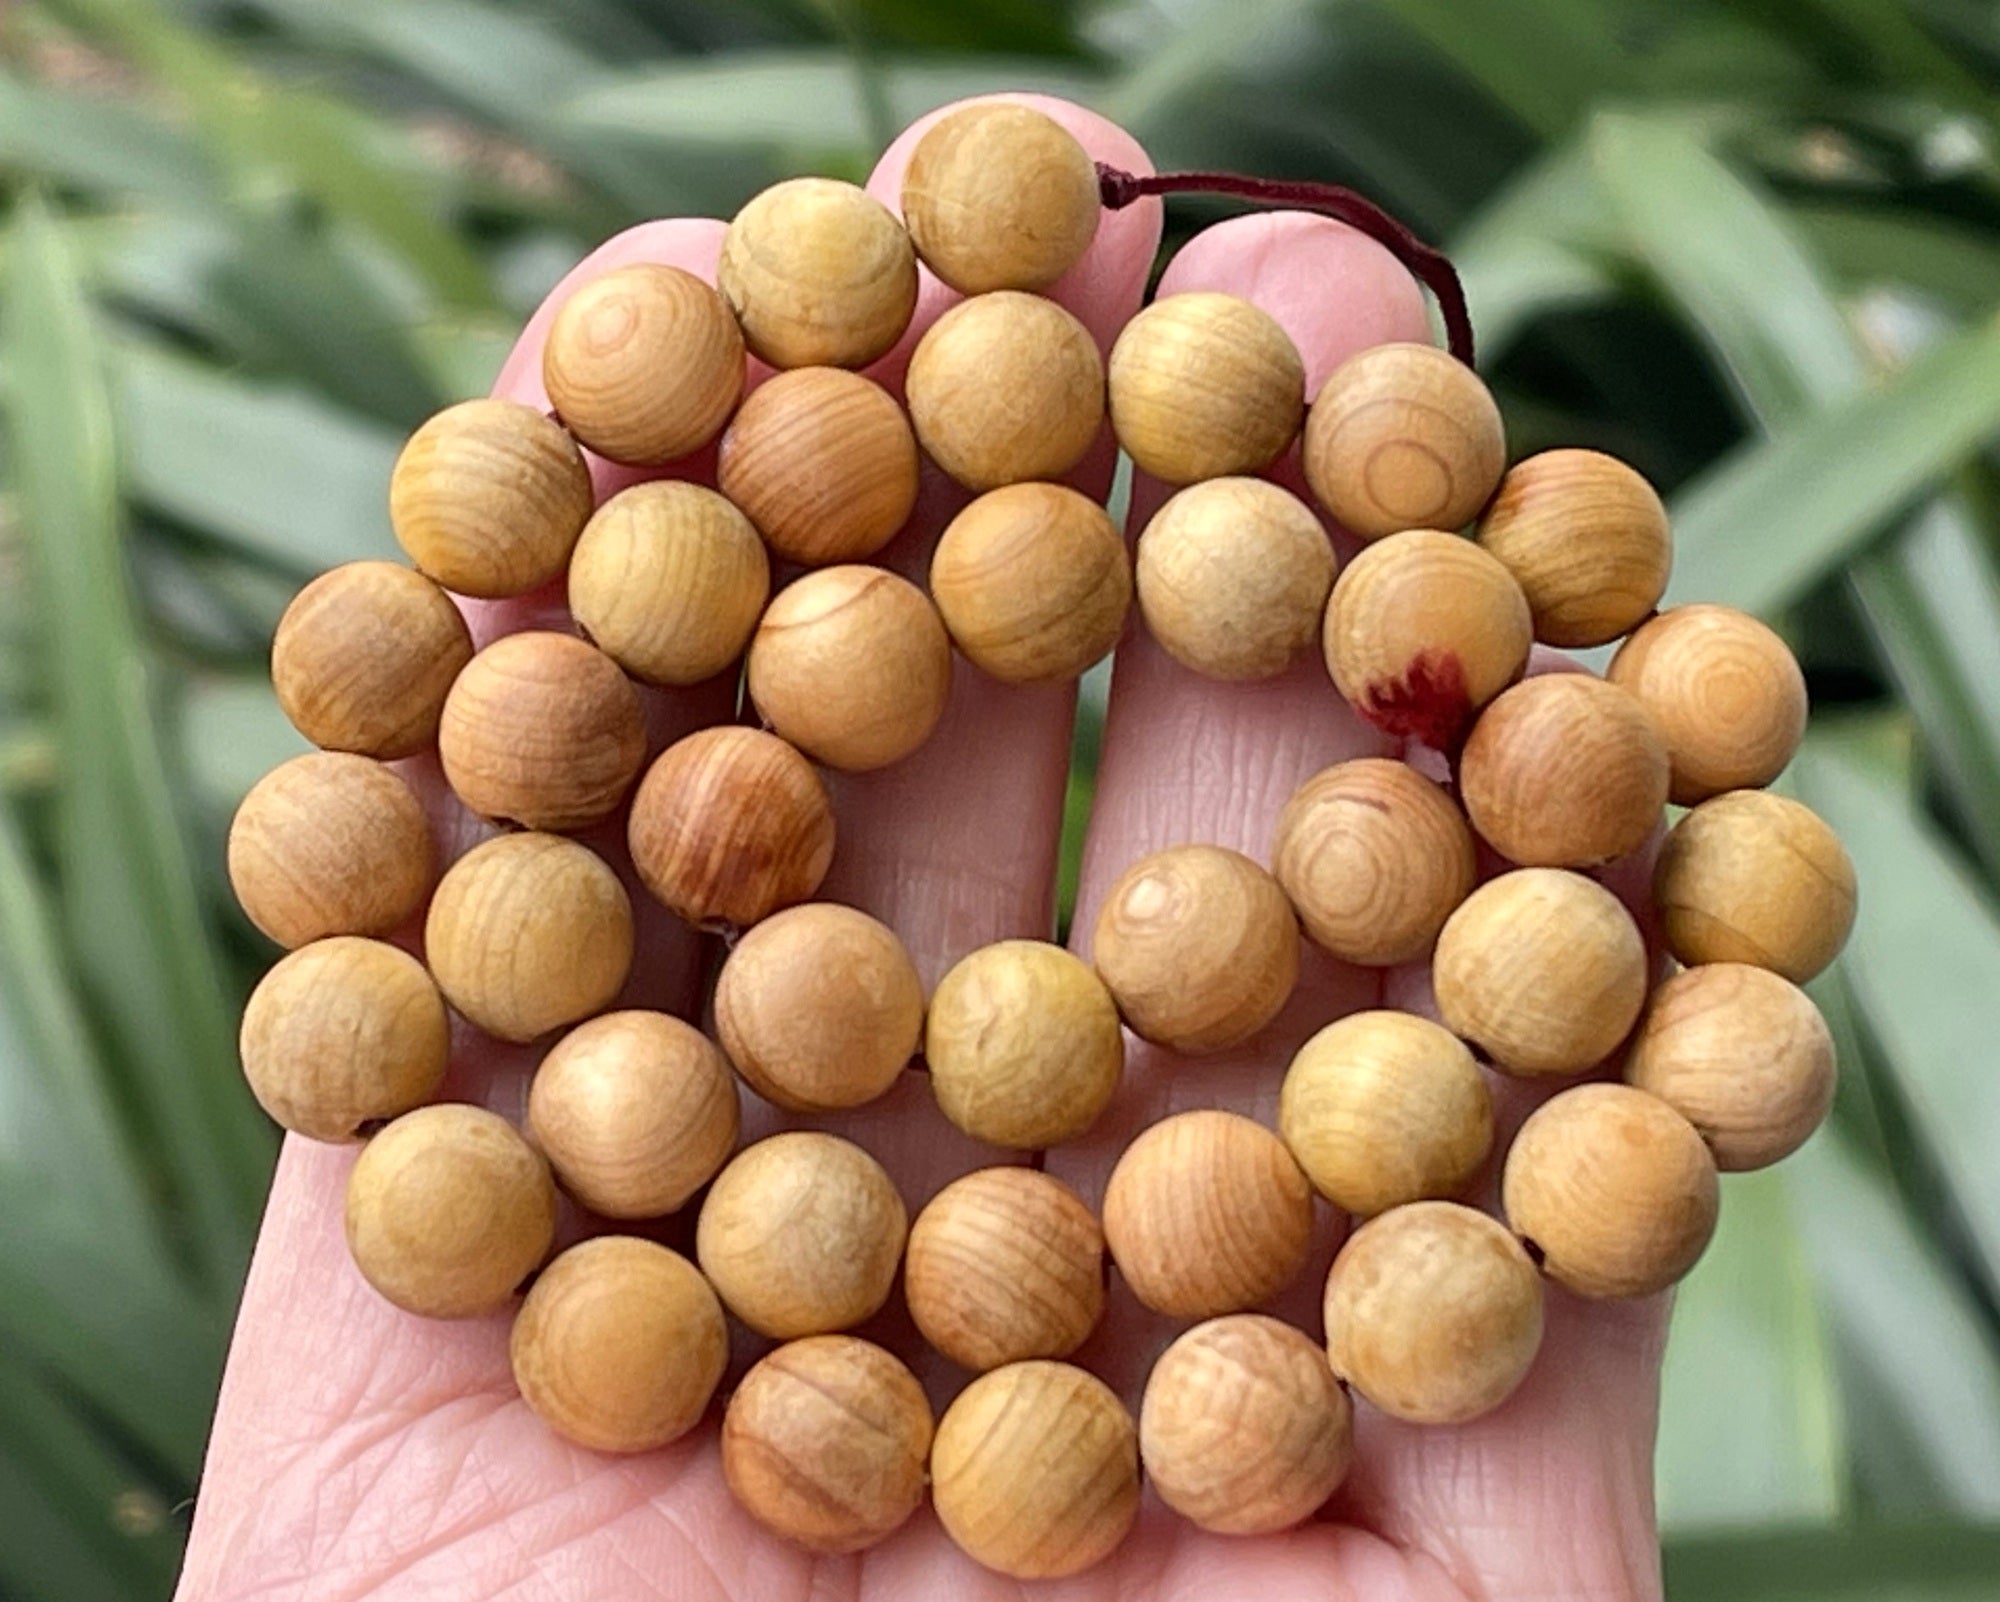 Golden Sandalwood 10mm round natural aromatic wood beads 16" strand - Oz Beads 